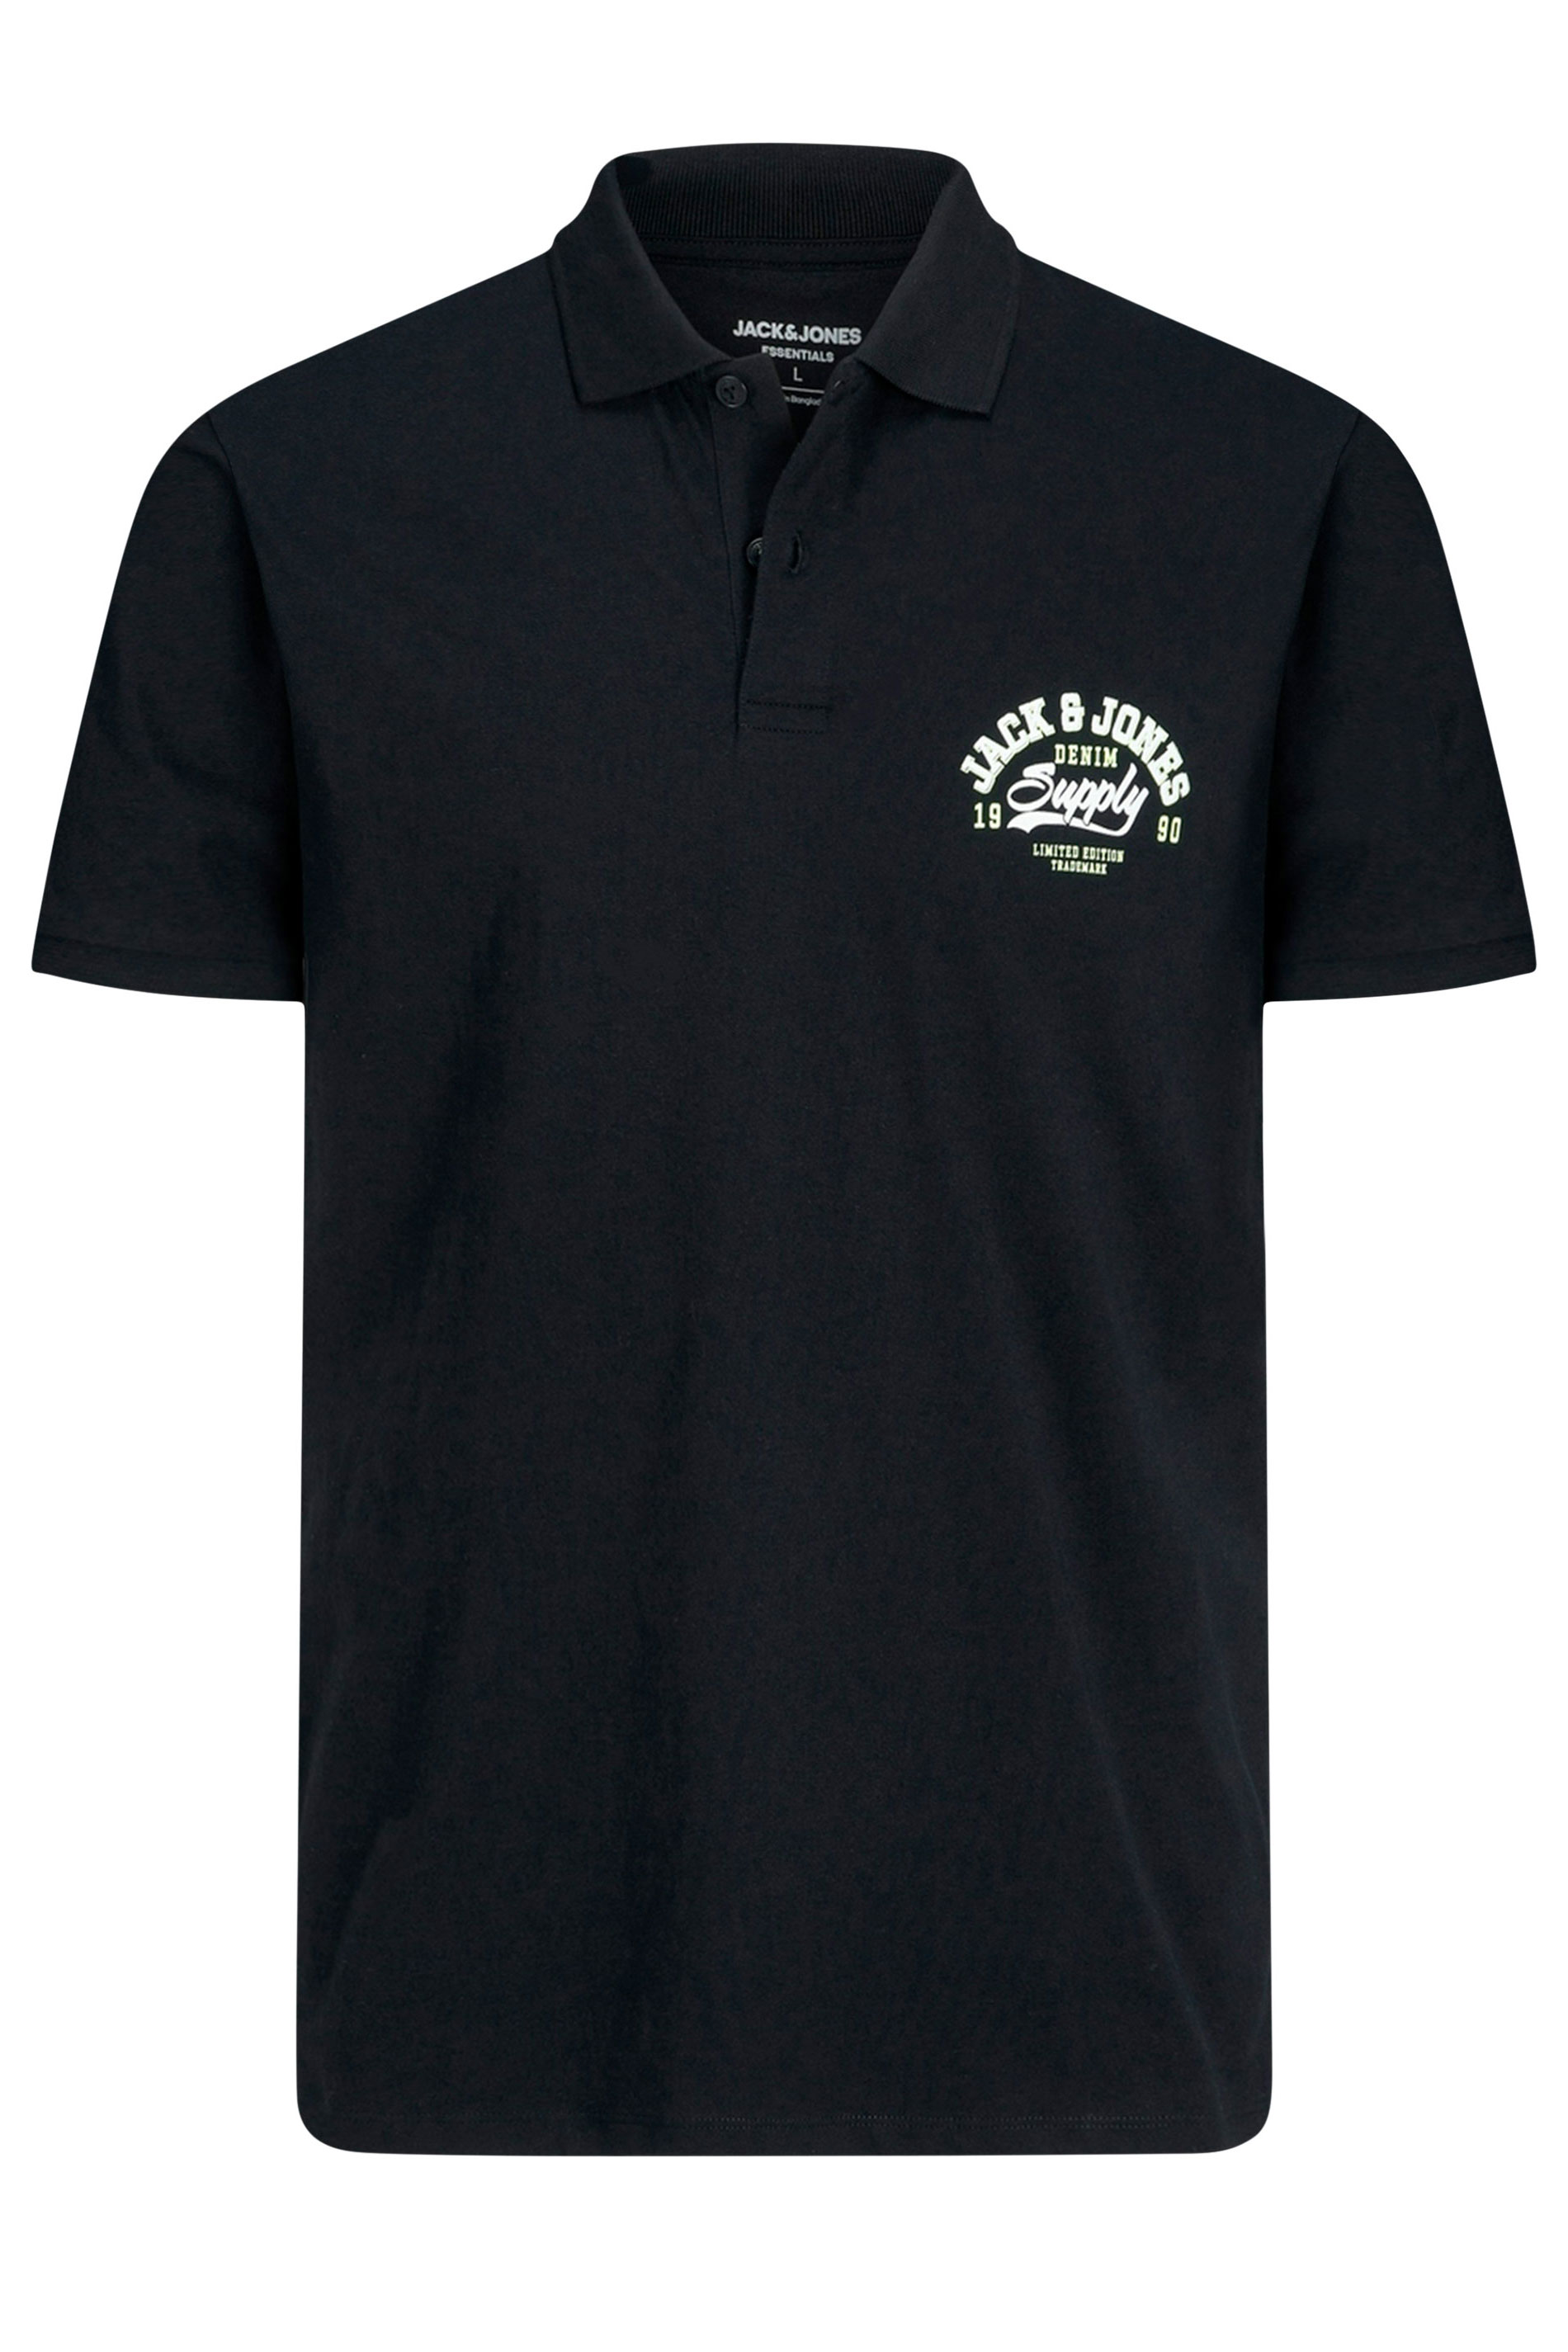 Image of Size 1Xl Mens Jack & Jones Big & Tall Black Logo Short Sleeve Polo Shirt Big & Tall